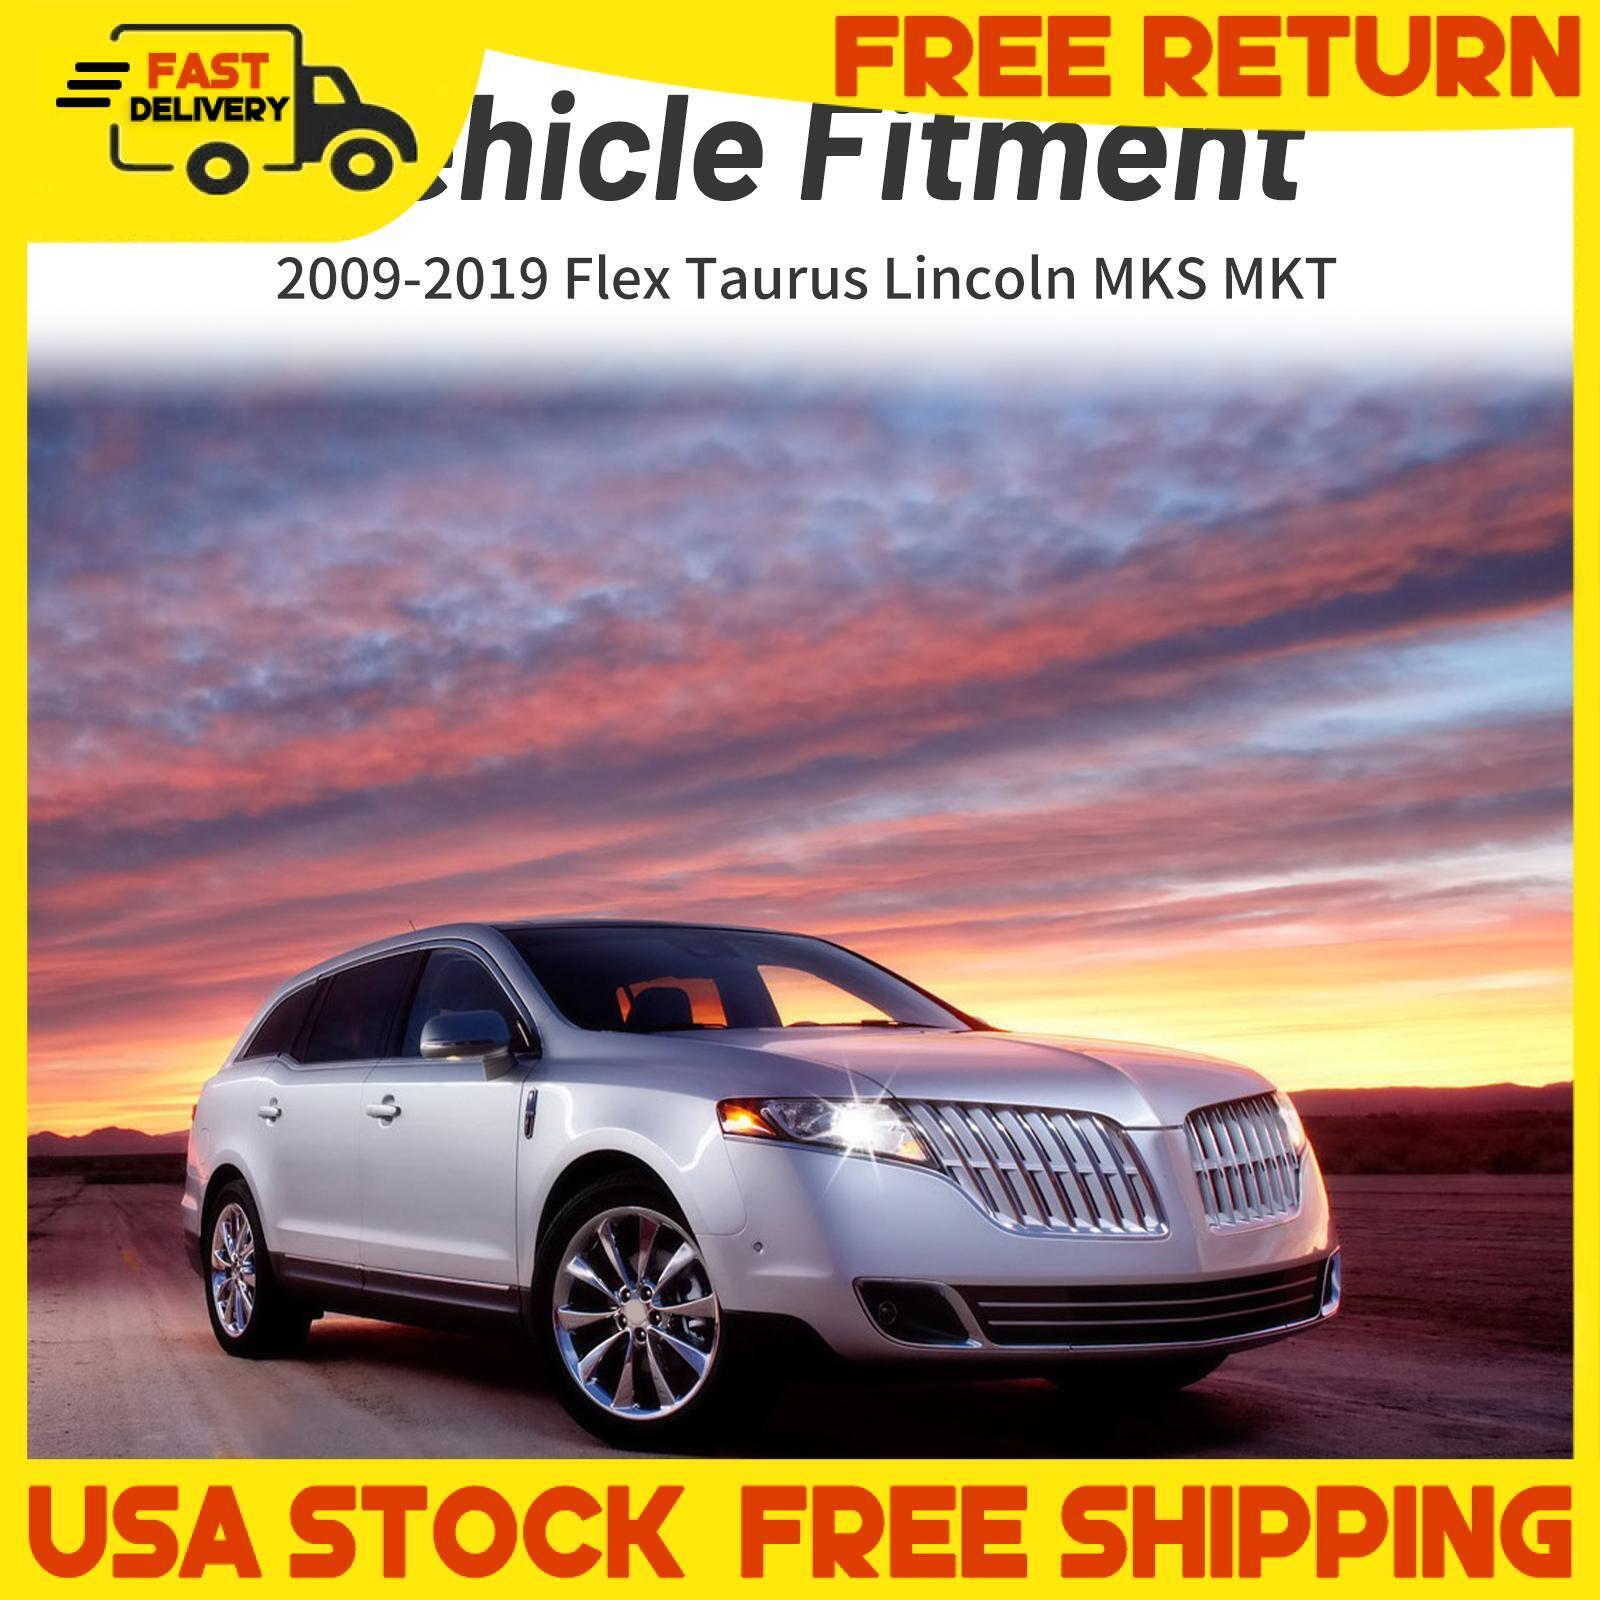 New 2* Front & Rear Wheel Hub Bearings for Taurus Lincoln MKS MKT 2009-2019 Flex